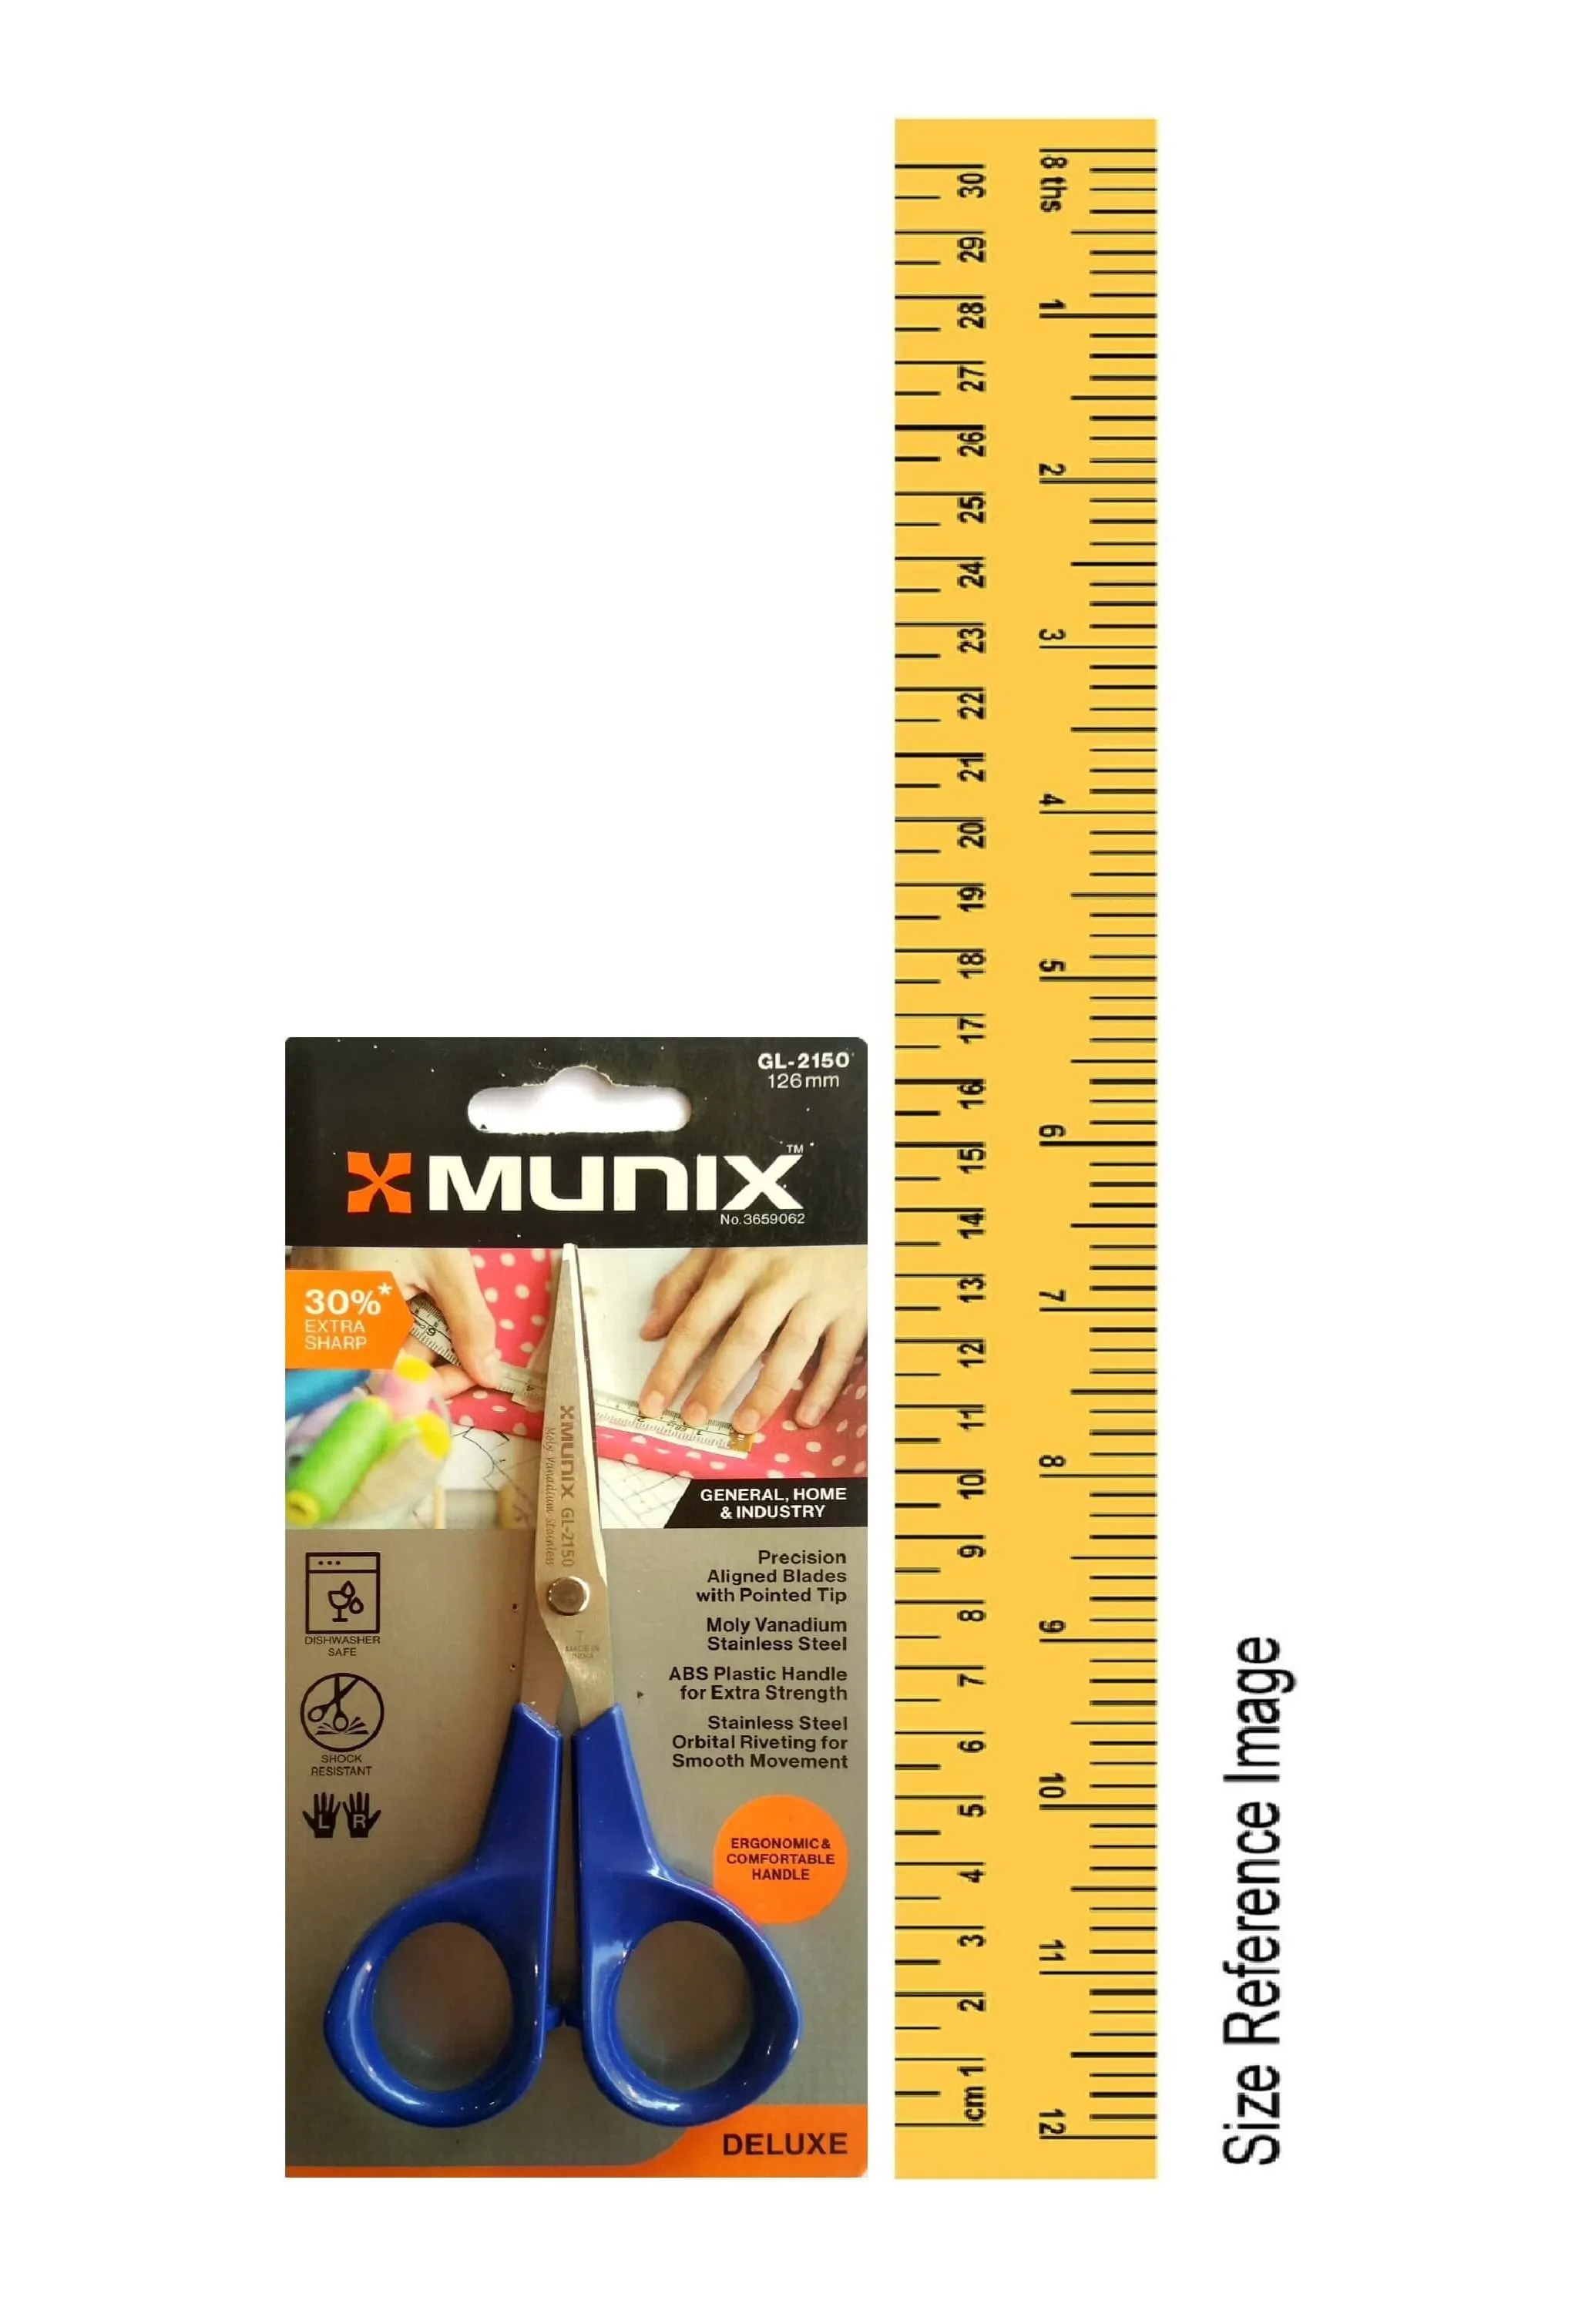 Kangaro Munix Scissors GL-2150  126 mm , ( General, Home & Office ) Pack of 1